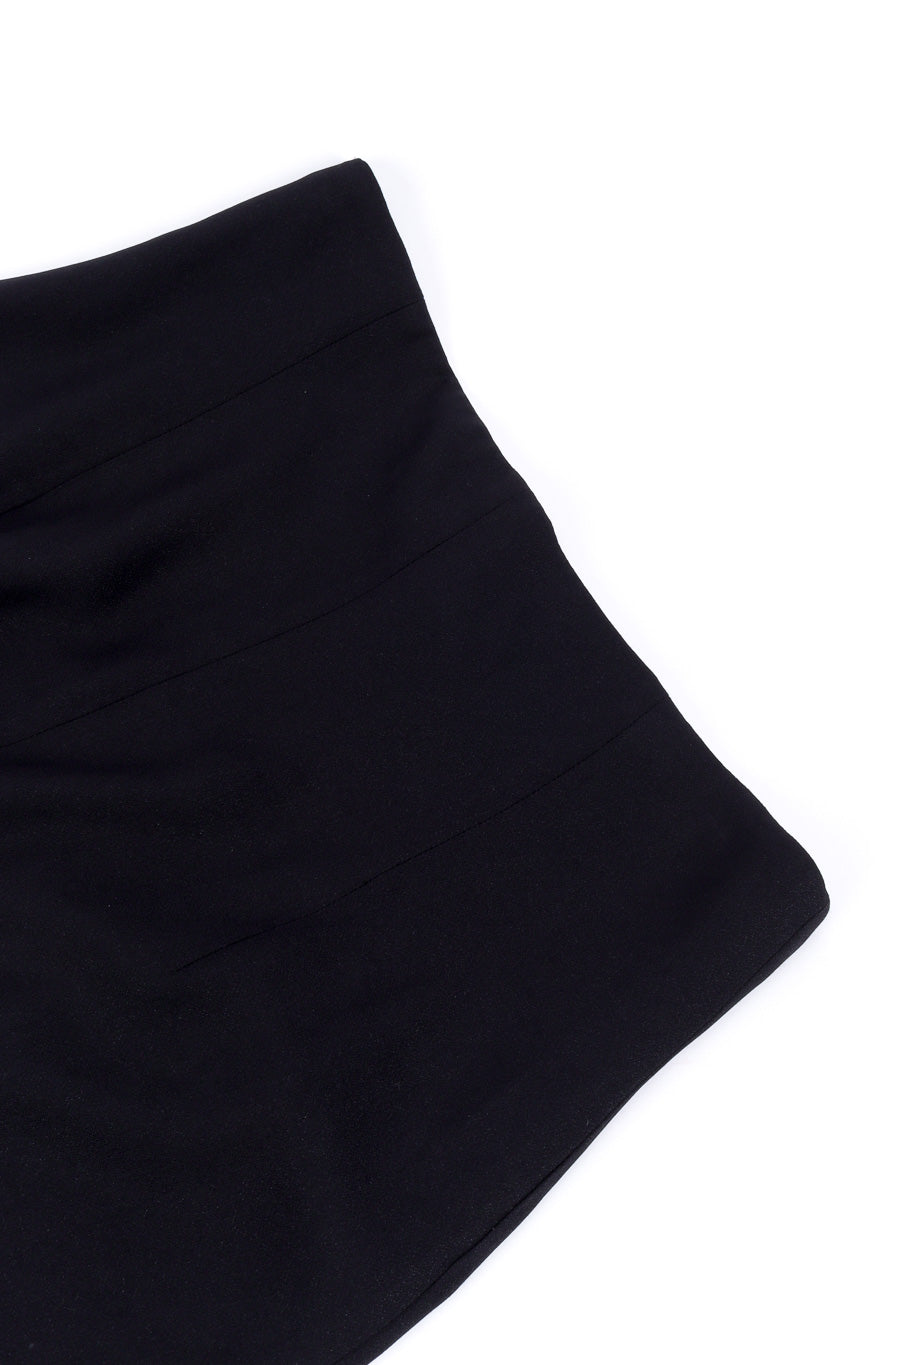 Vintage John Galliano 1999 S/S Draped Skirt waist closeup @recessla